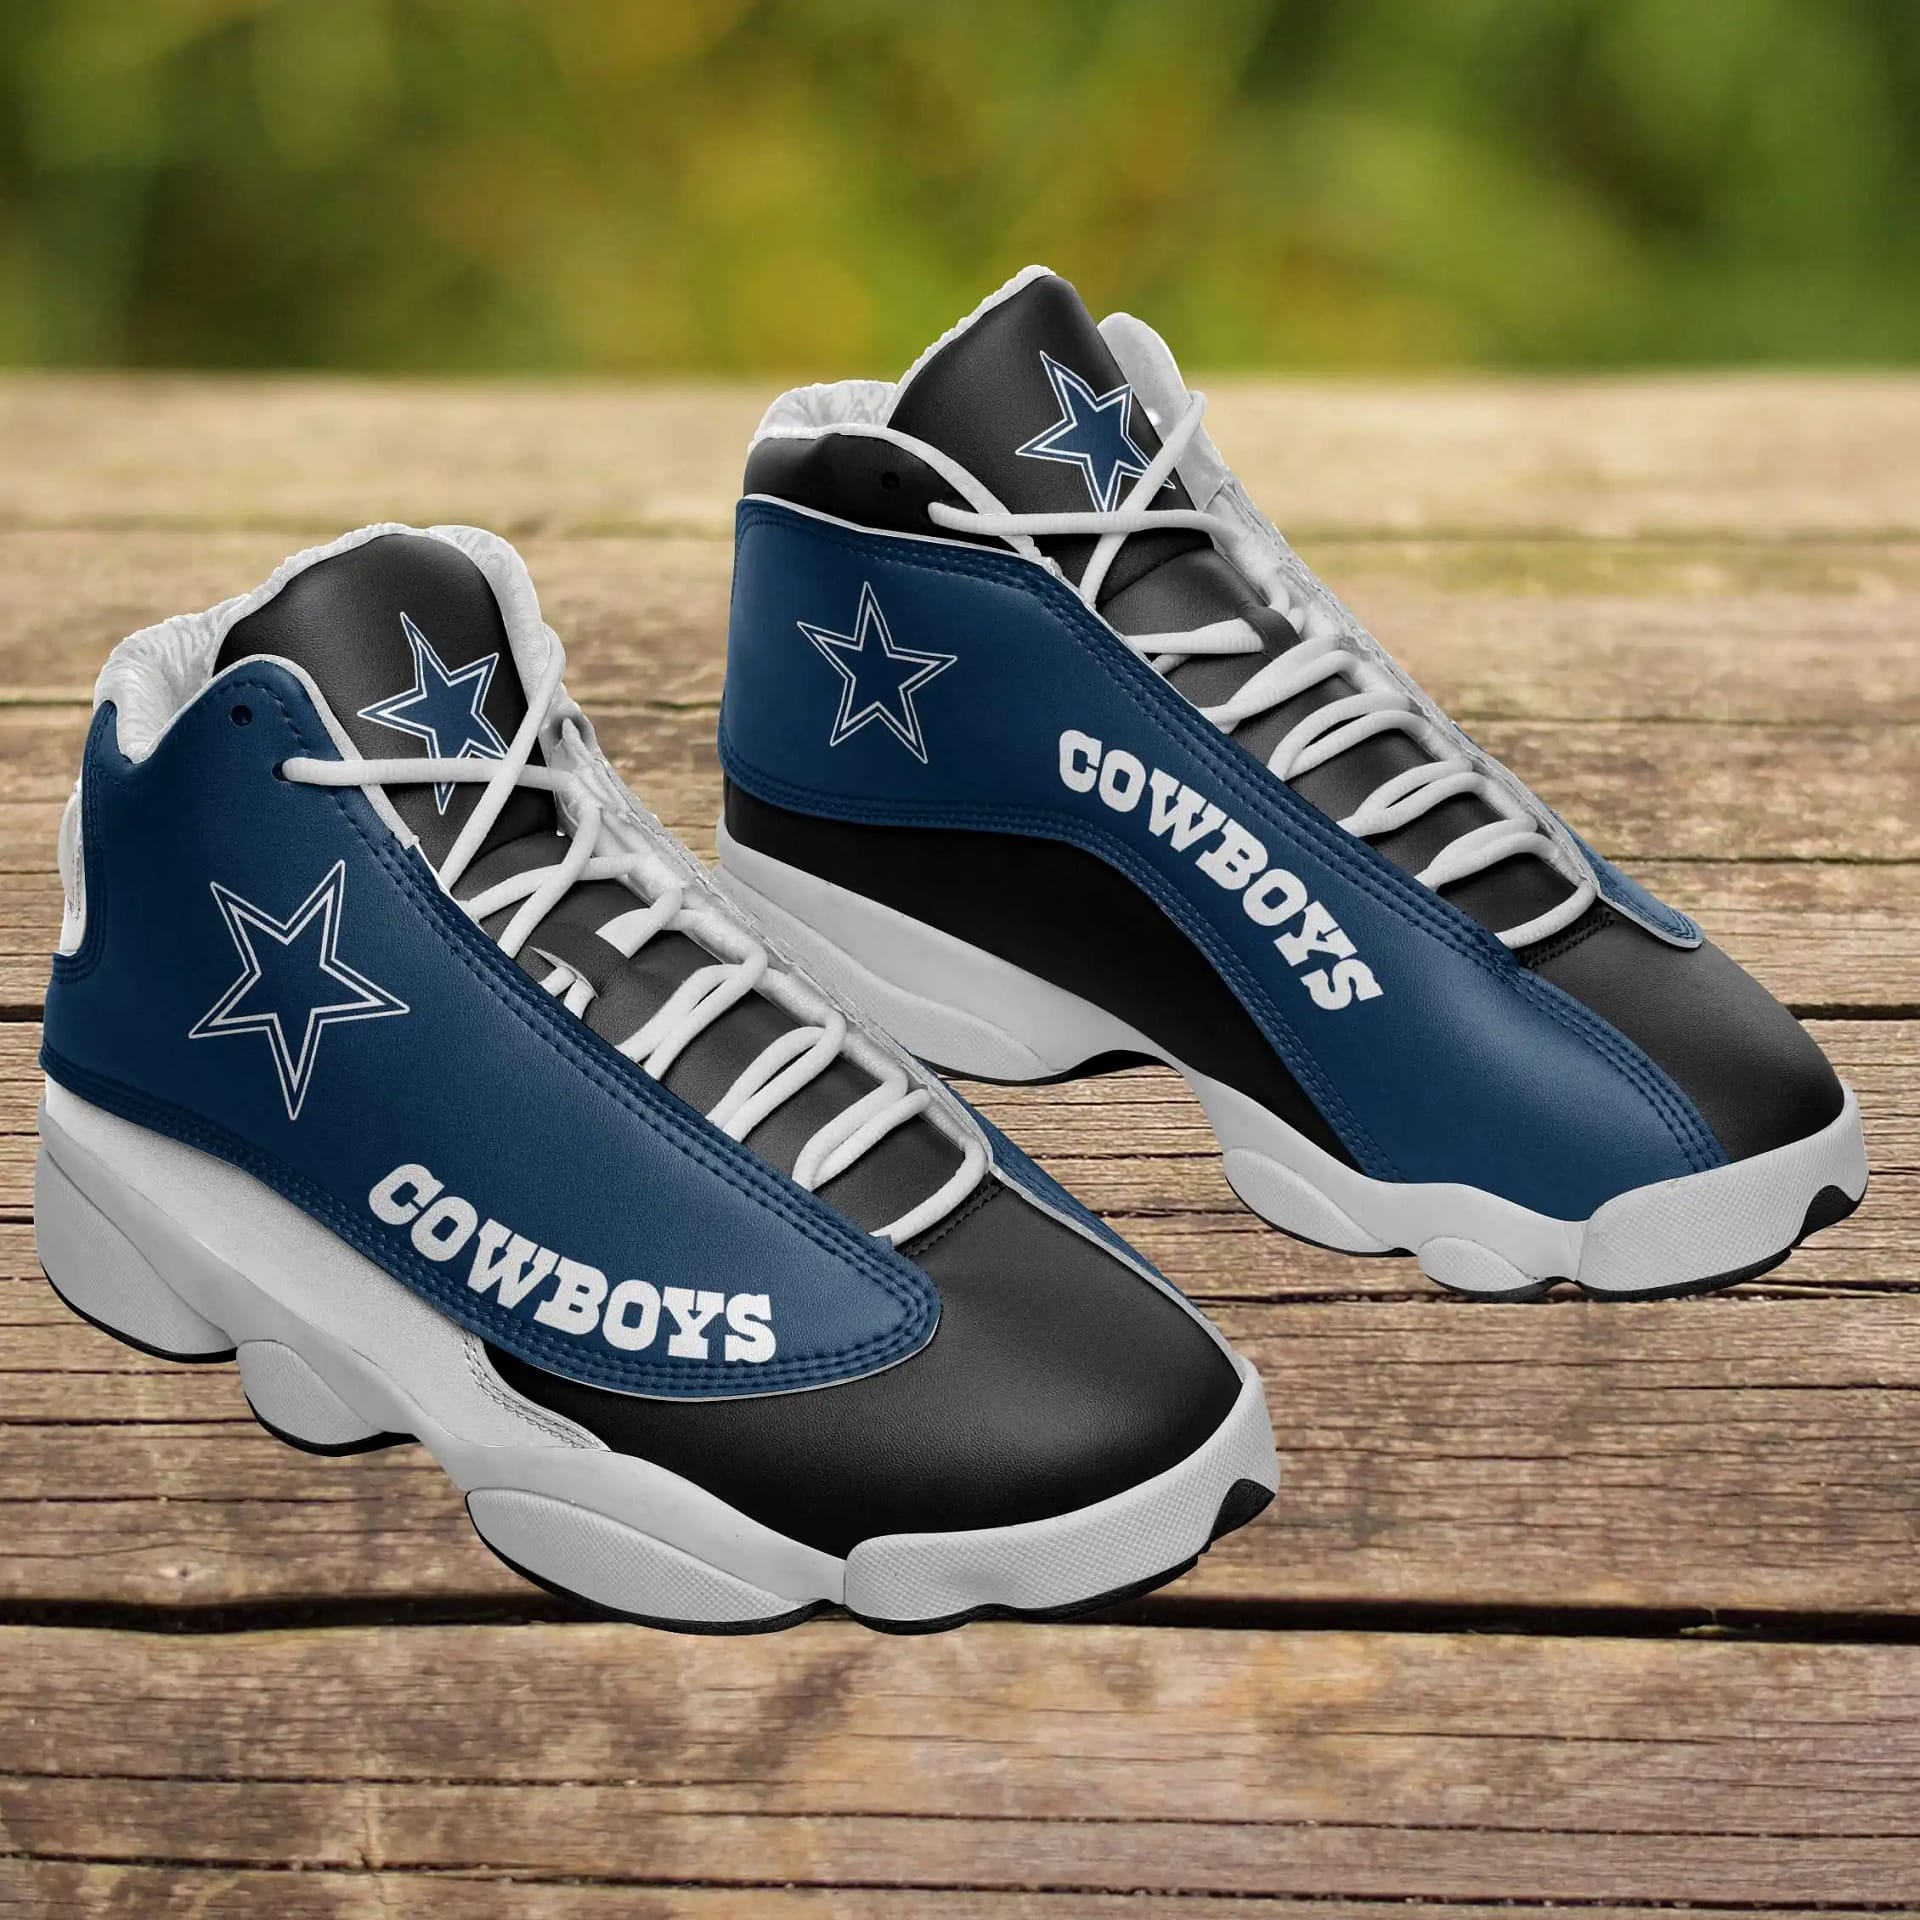 Dallas Cowboys Air Jordan Shoes